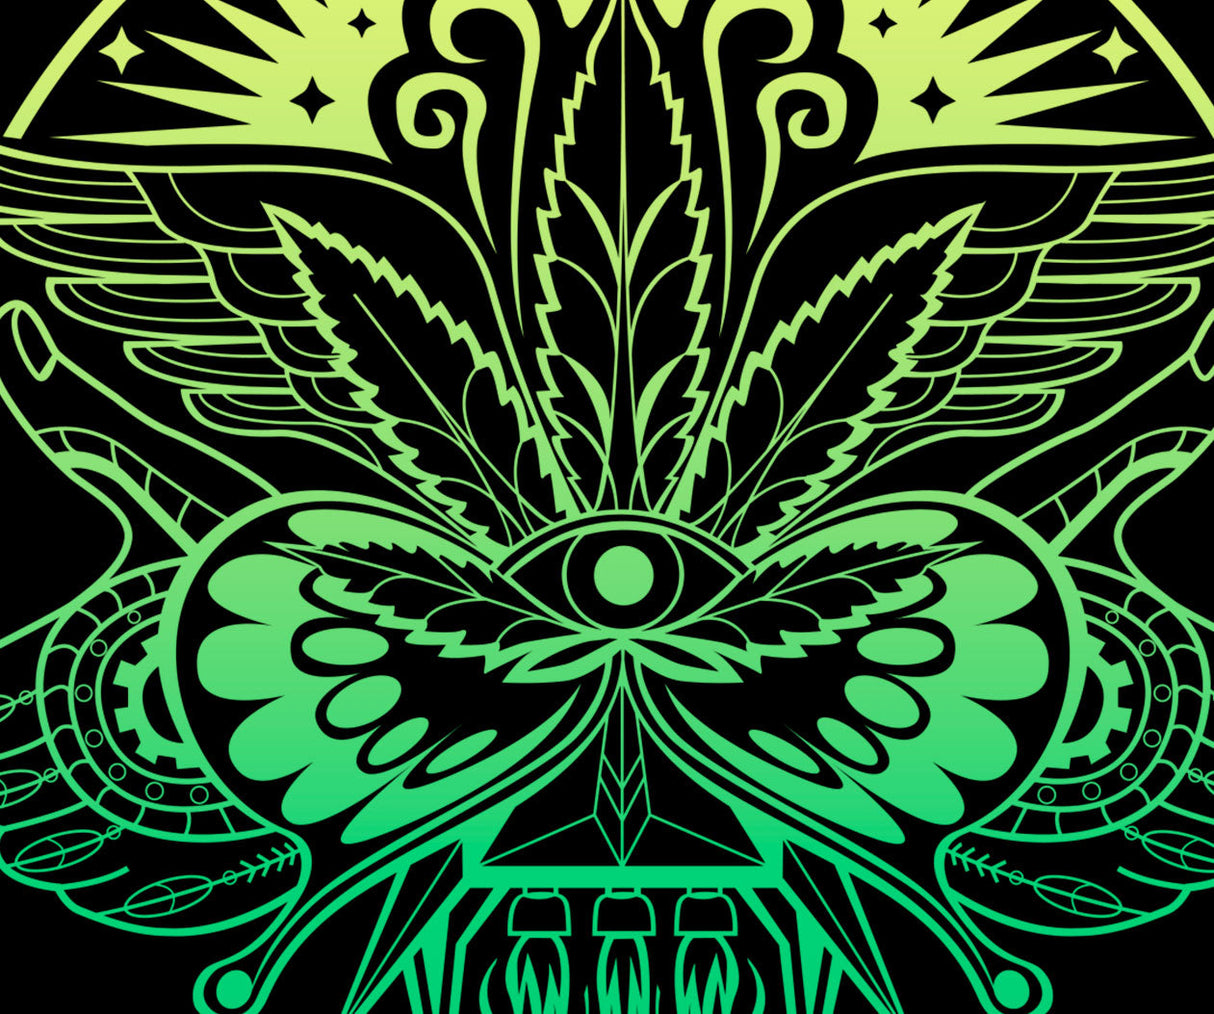 StonerDays Mandala 222 T-Shirt design close-up featuring intricate green and teal cannabis-themed mandala